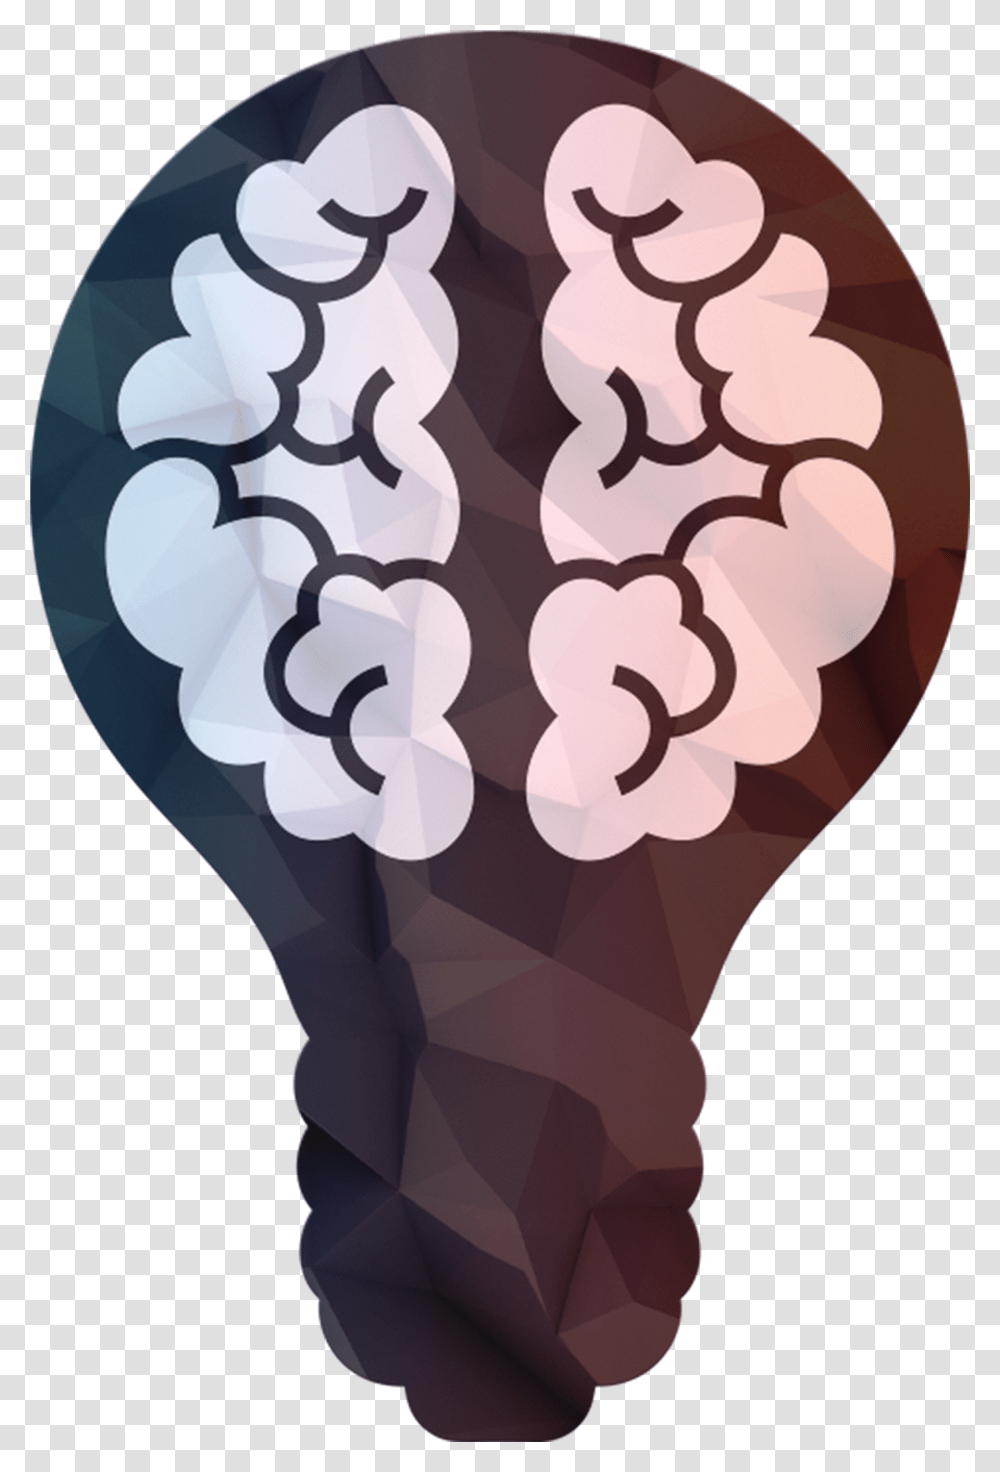 Light Bulb With Brain Inside Drawing Imagenes De Cerebro Transparent Png